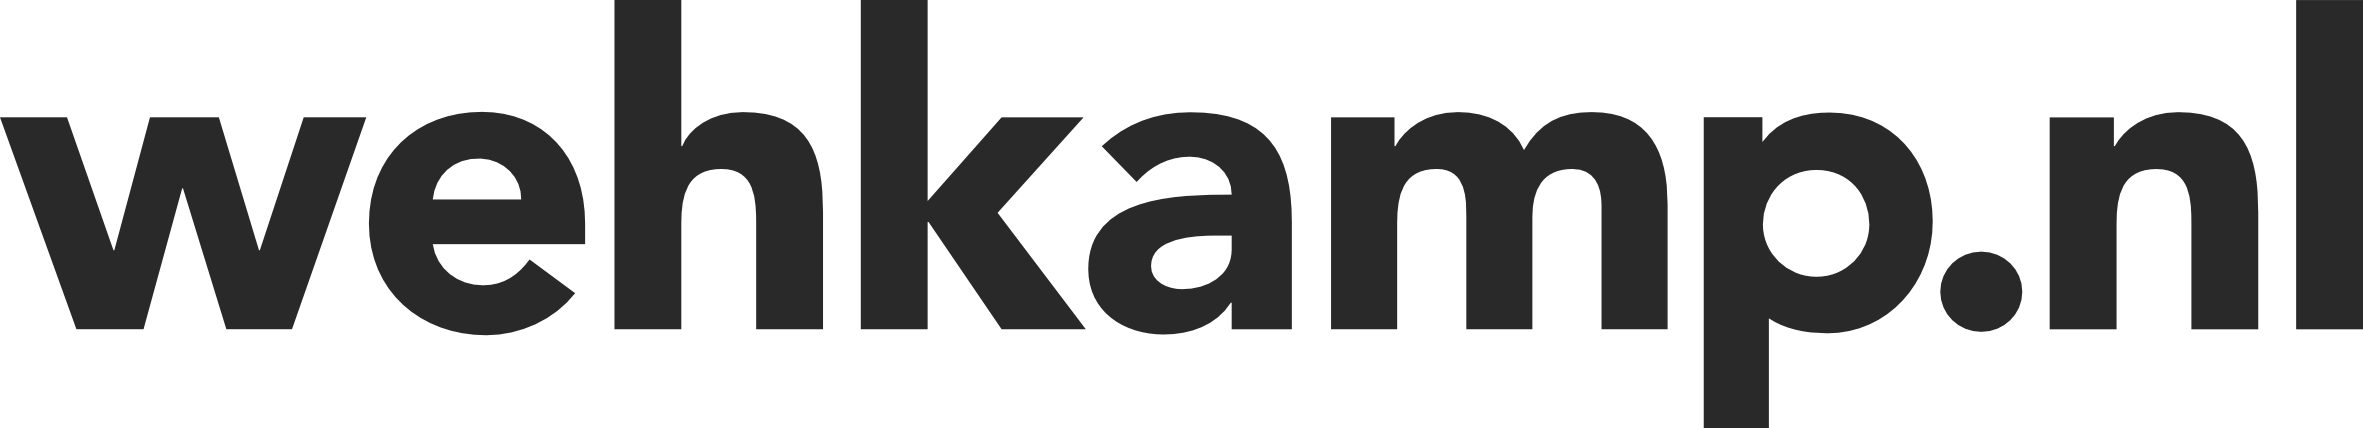 wehkamp-logo